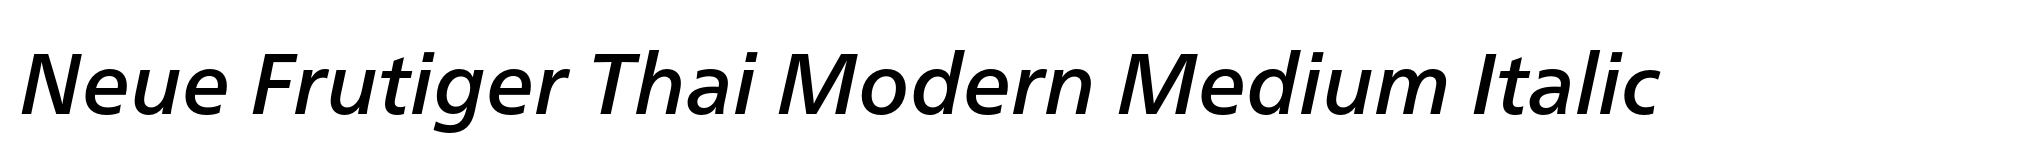 Neue Frutiger Thai Modern Medium Italic image